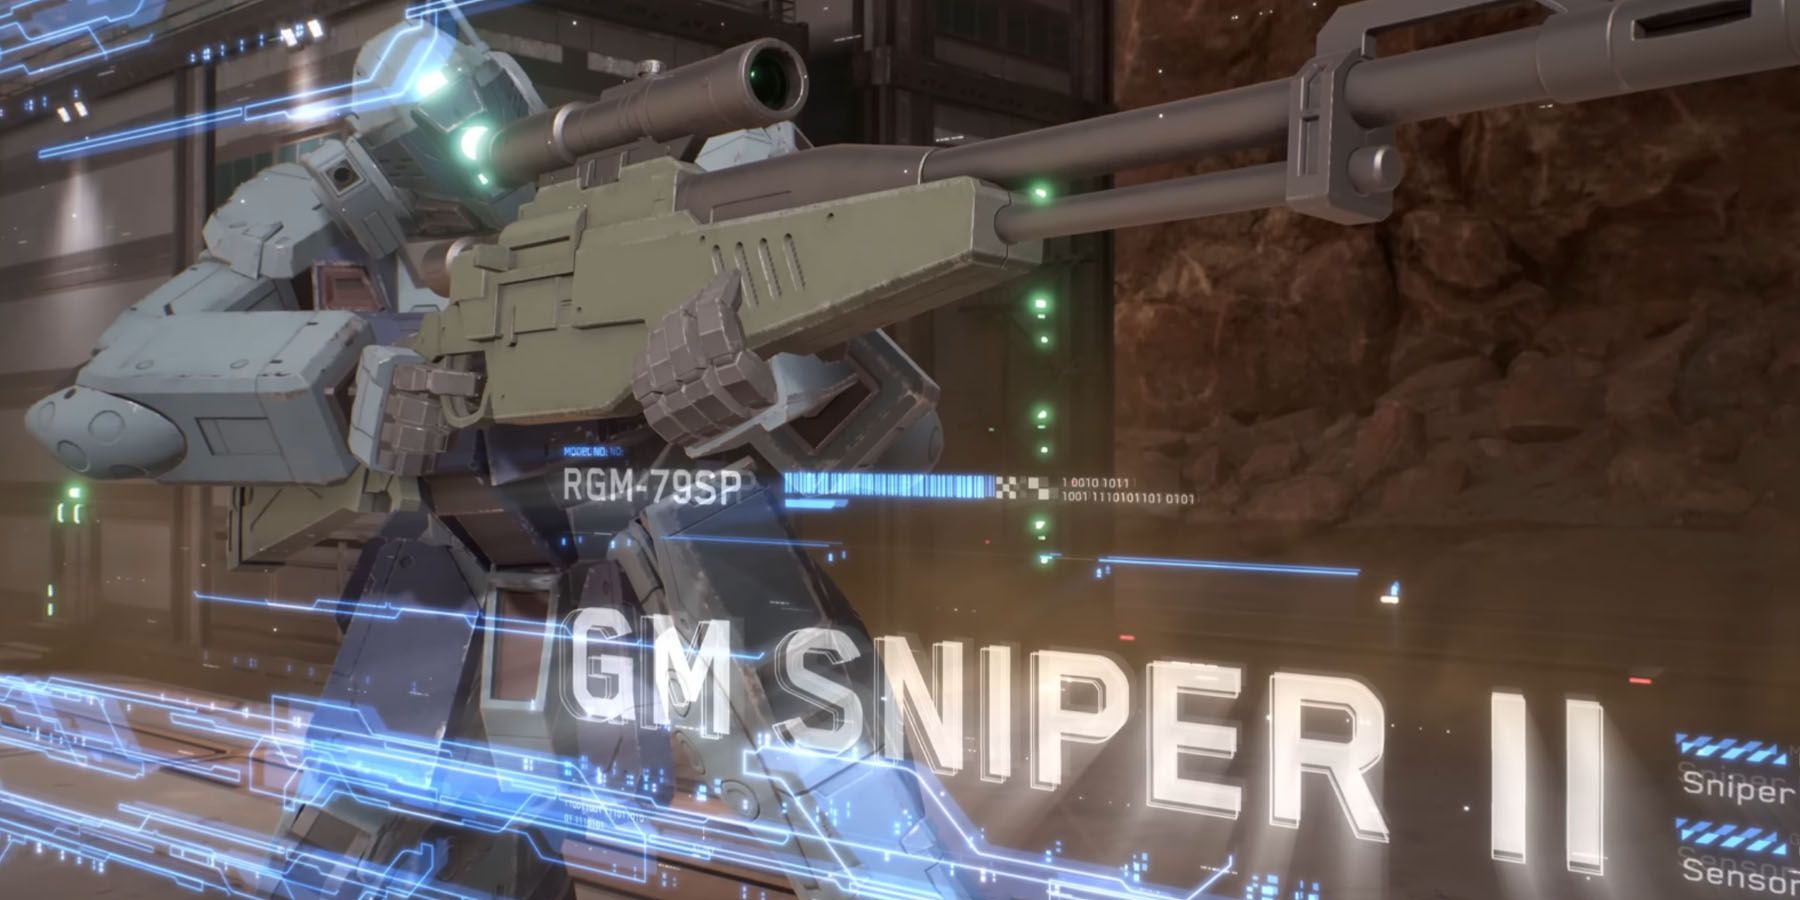 GM Sniper can one-shot as a sniper